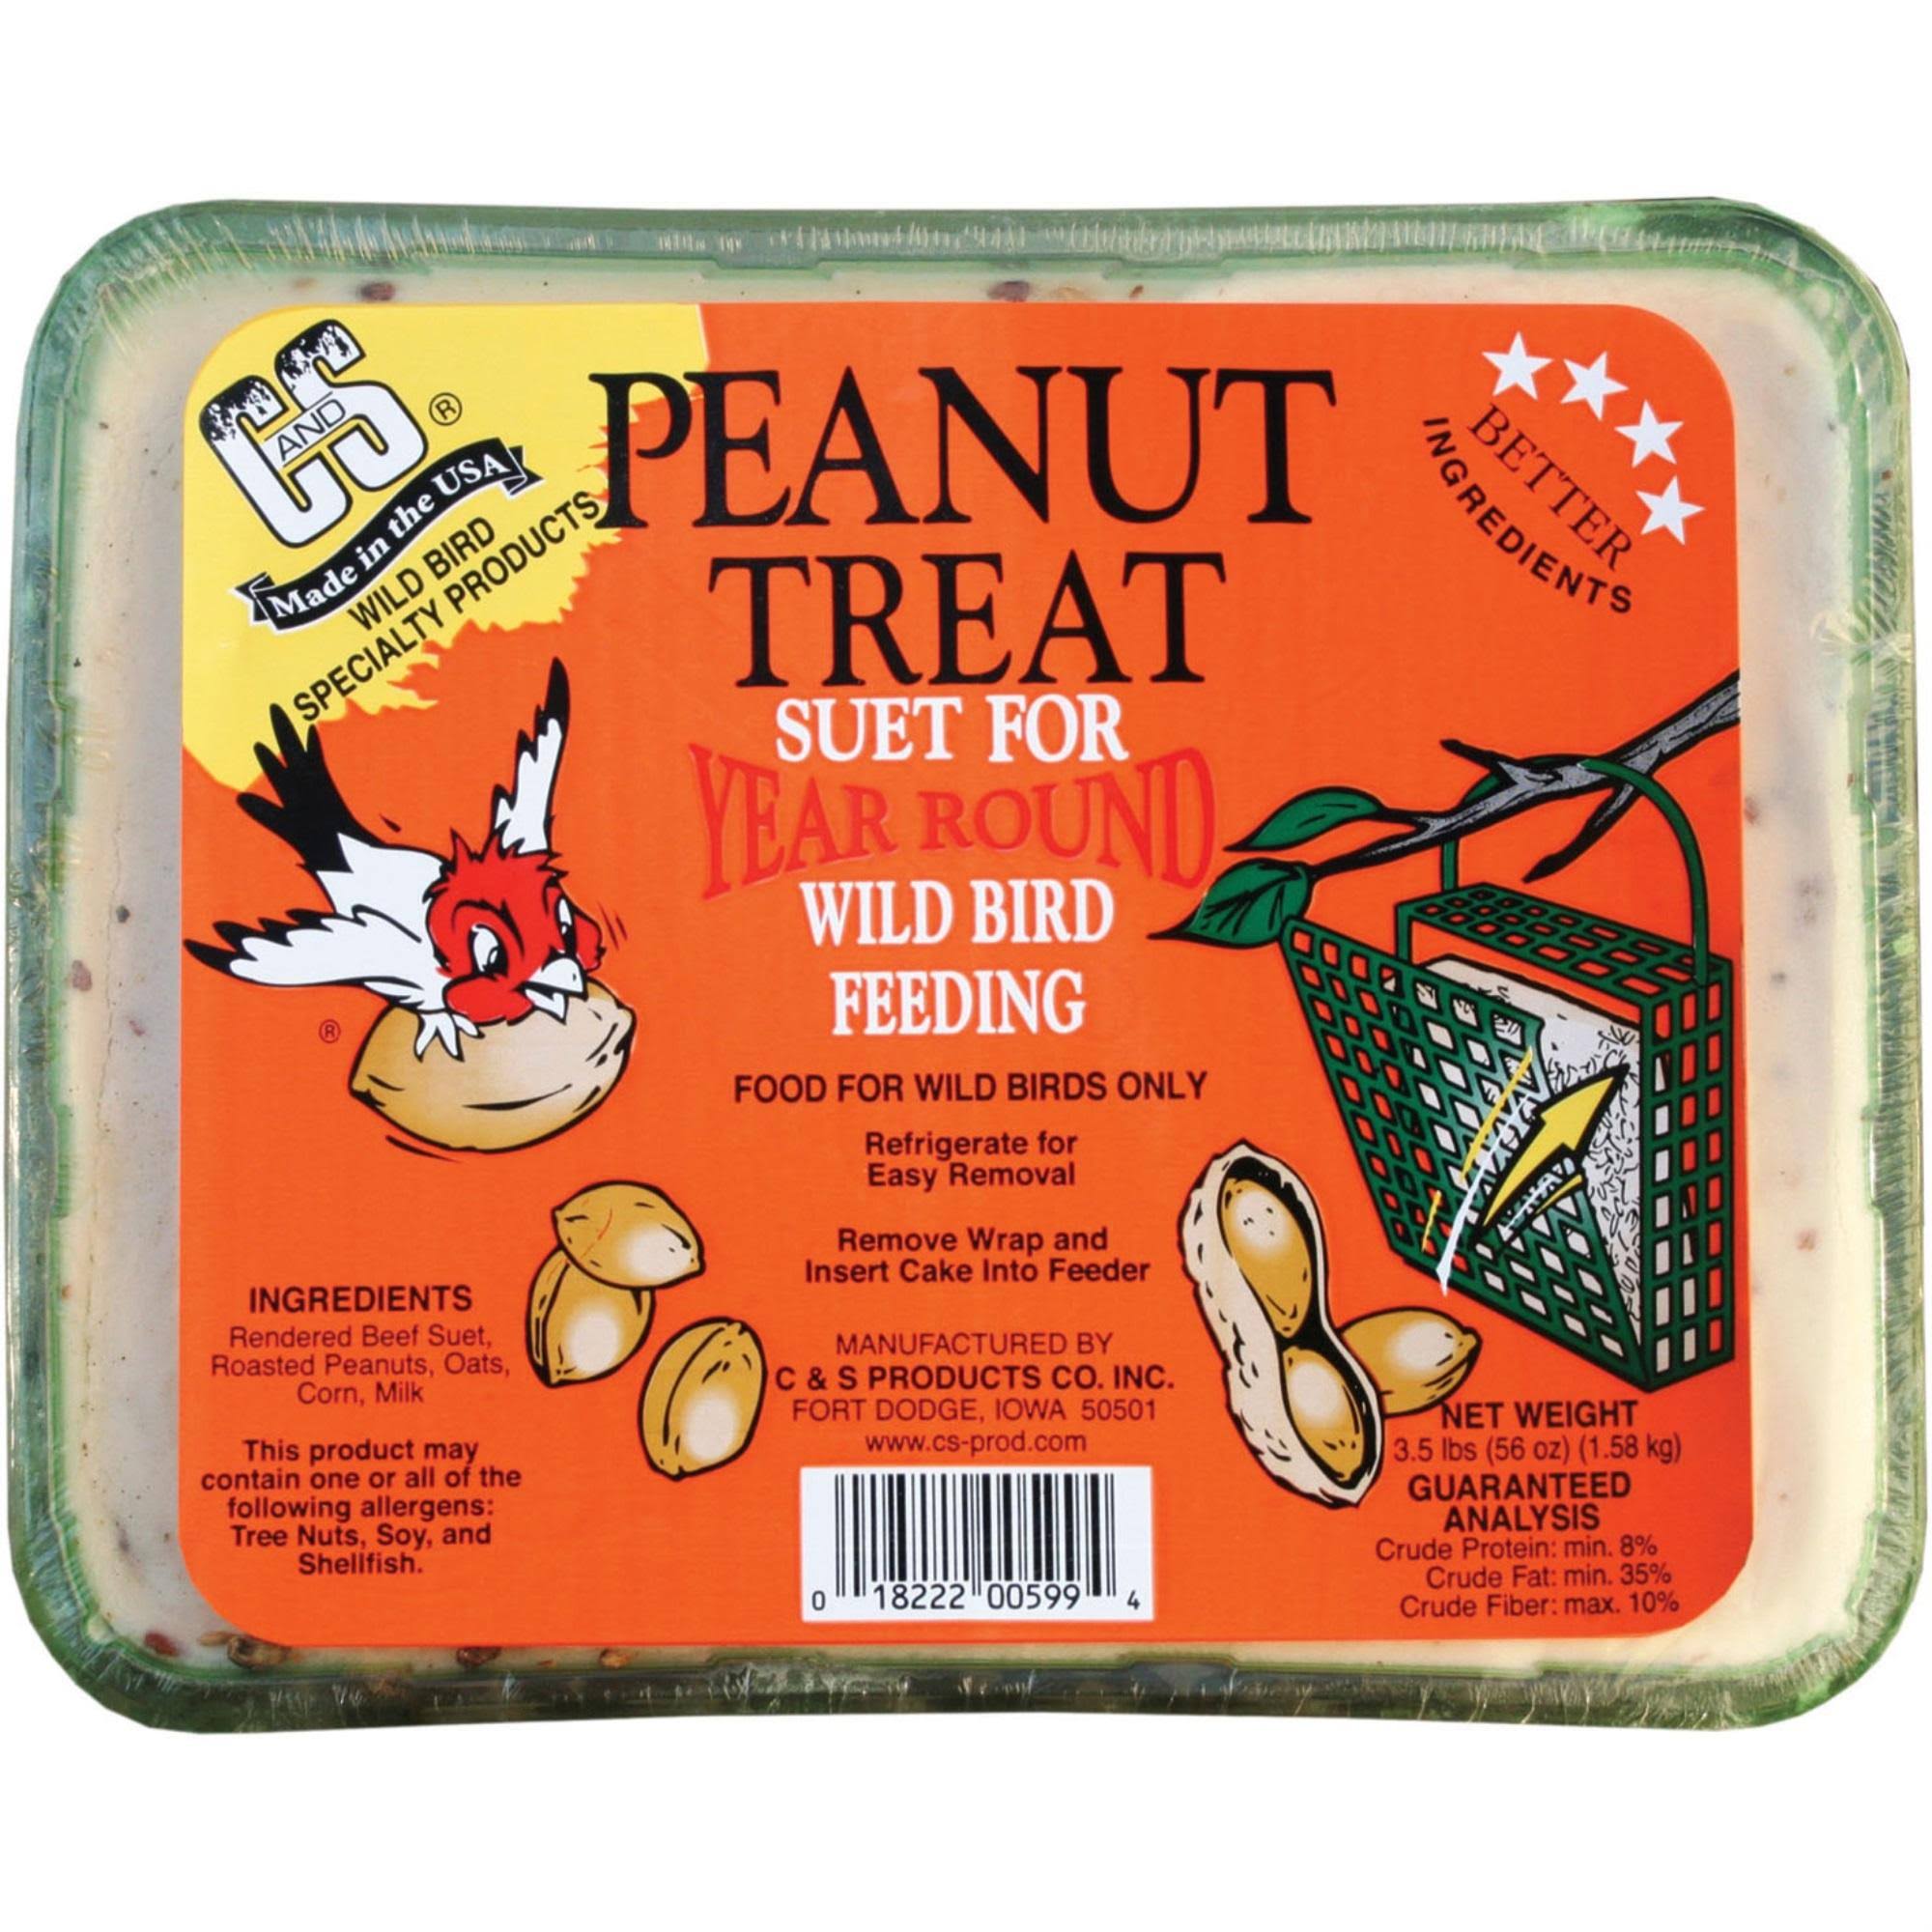 C and S Products Peanut Treat Bird Suet - 3.5lbs